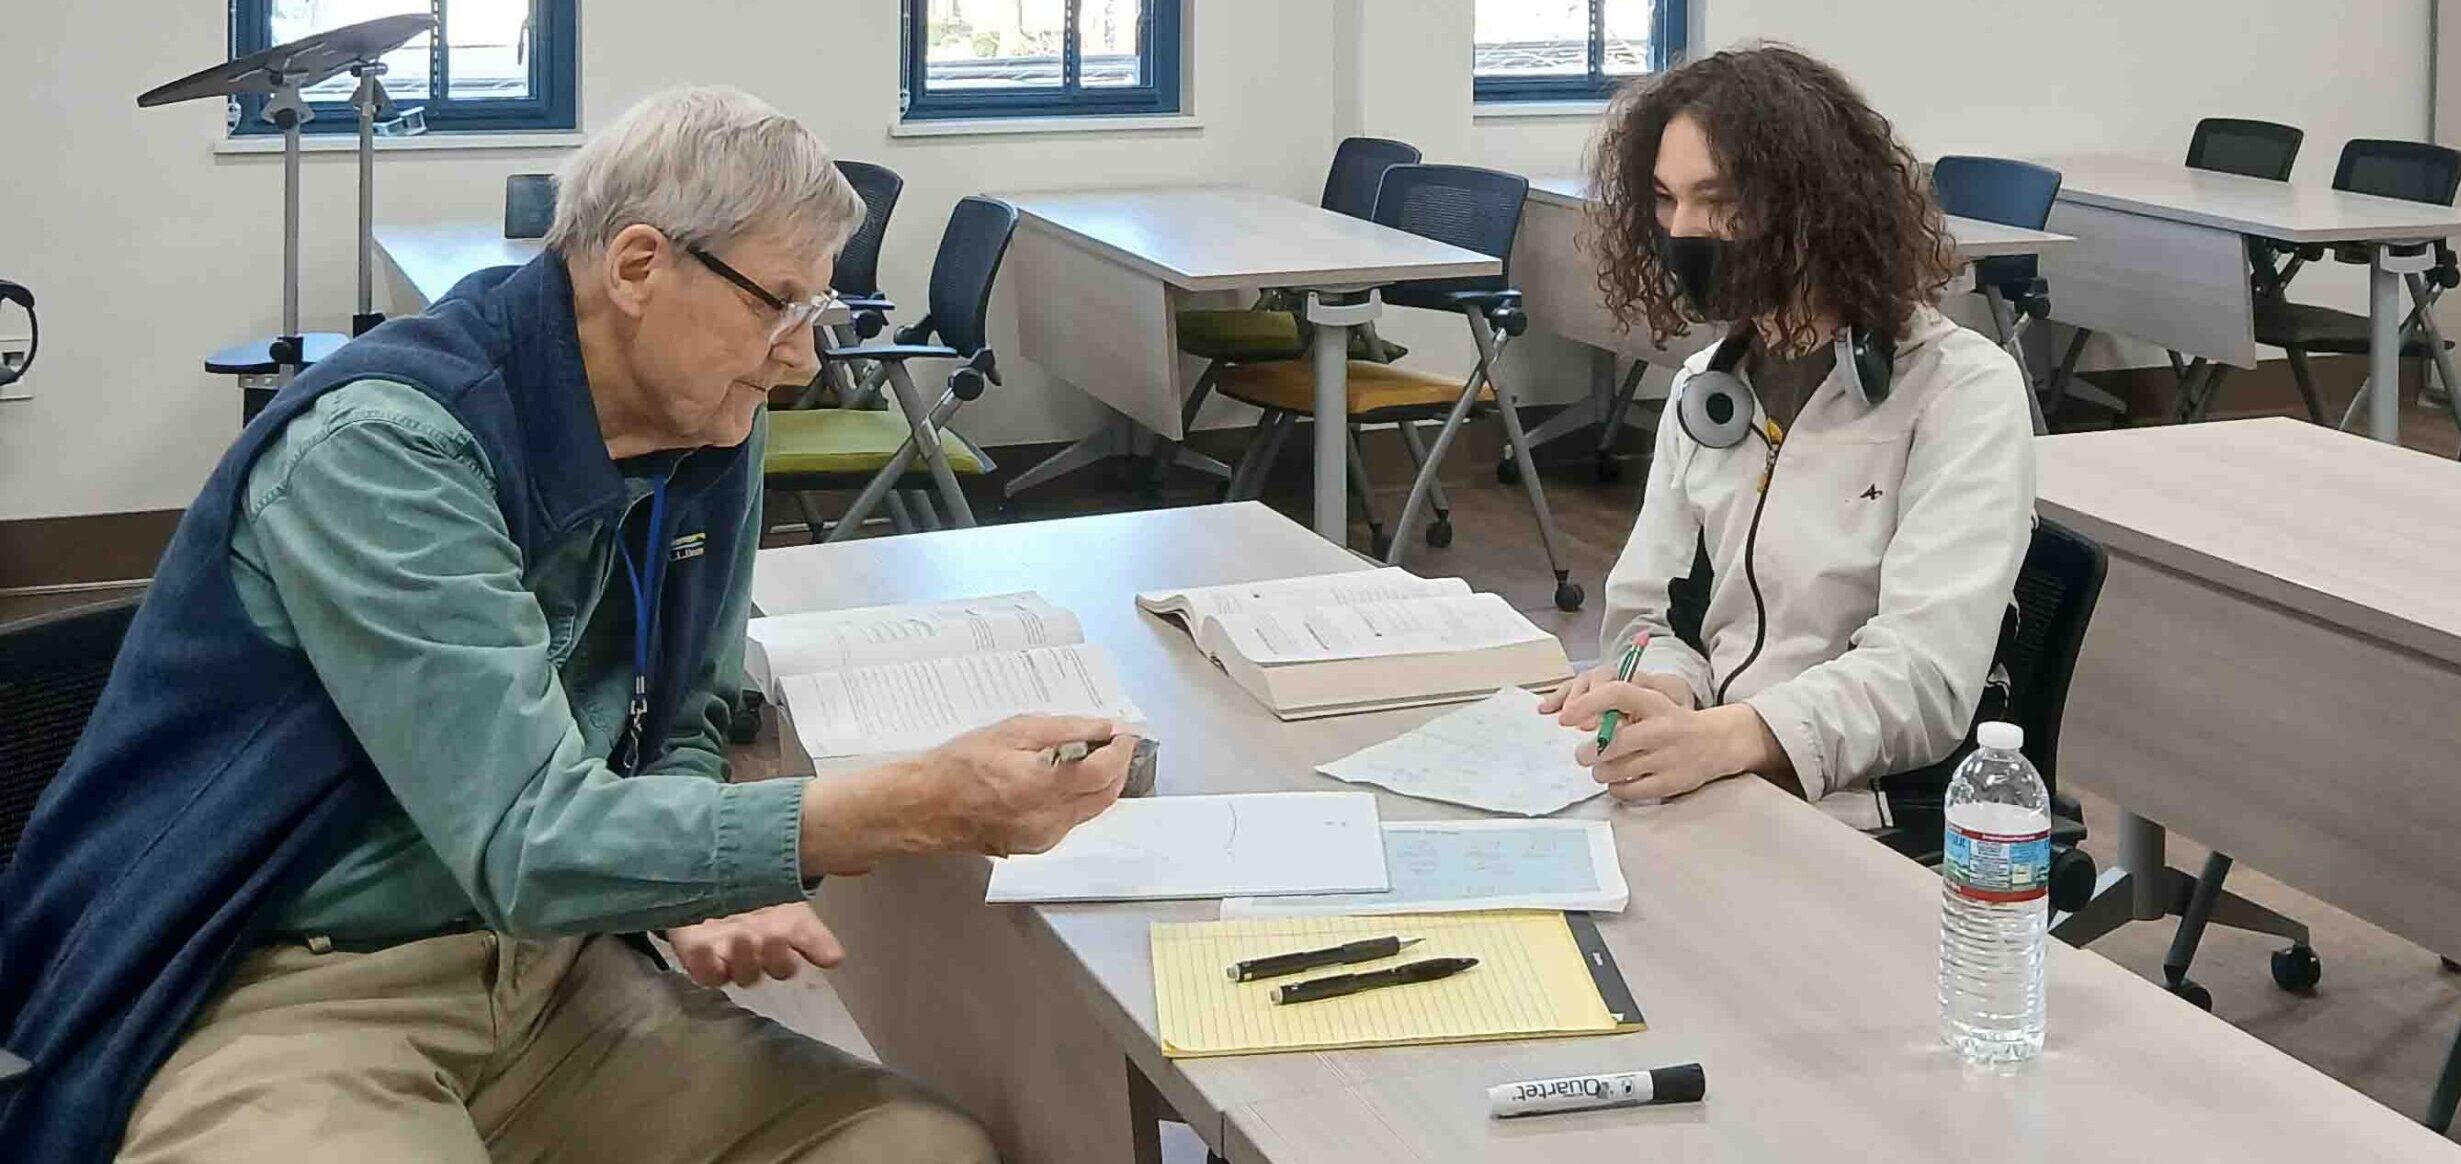 A lunch break volunteer tutoring a client